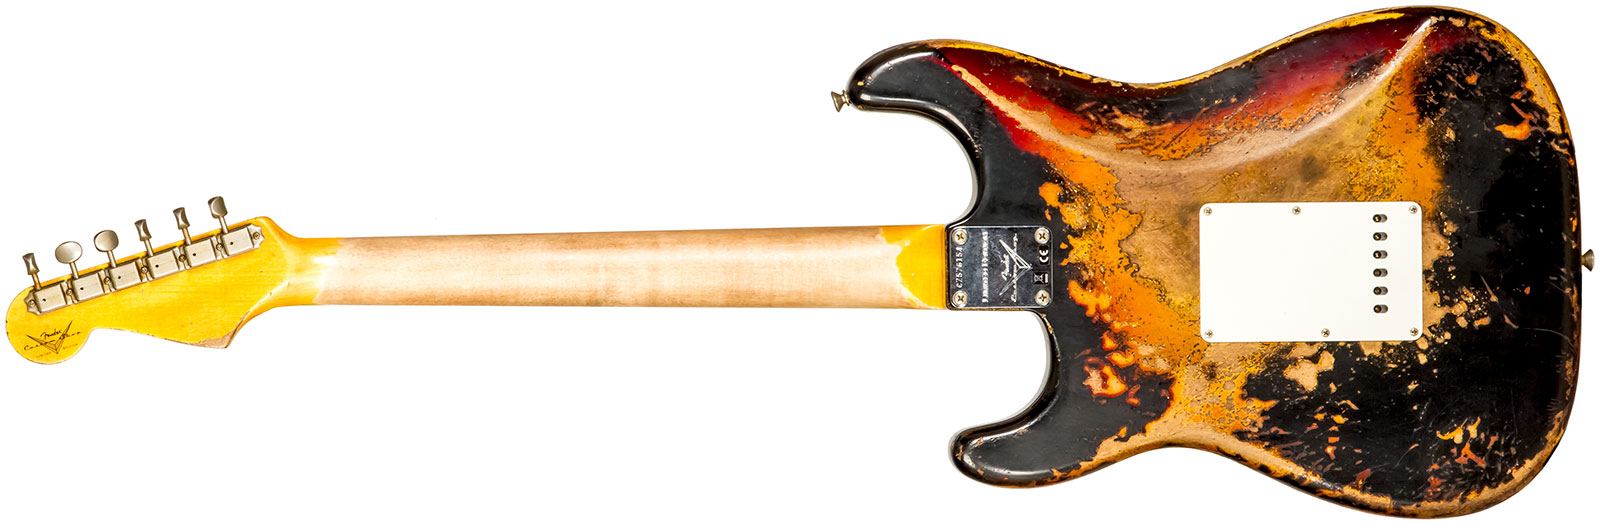 Fender Custom Shop Strat 1959 3s Trem Rw #cz576154 - Super Heavy Relic Black O. 3-color Sunburst - Guitare Électrique Forme Str - Variation 1